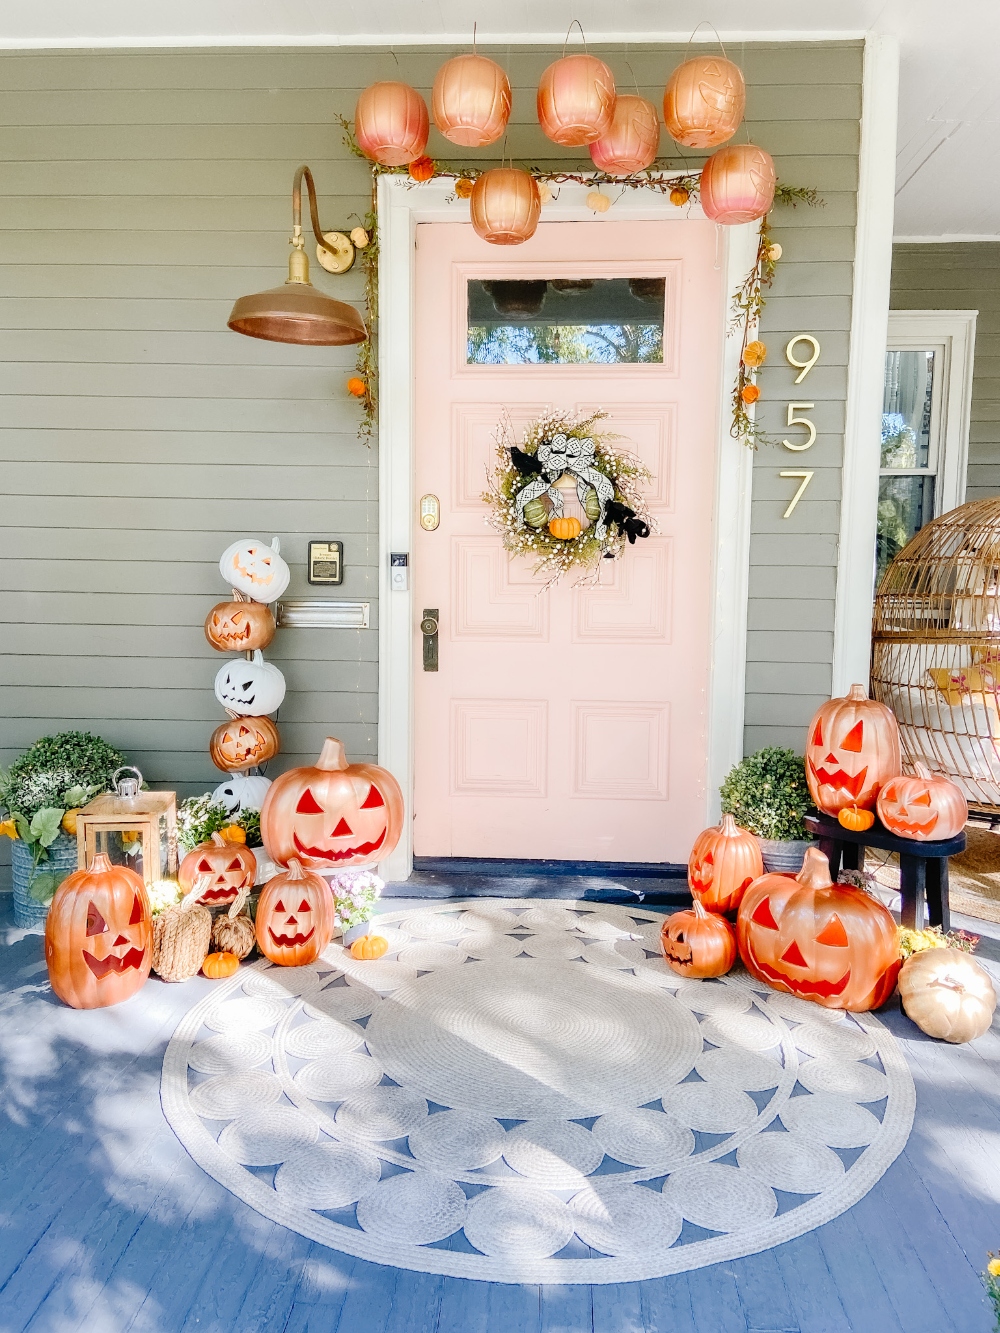 The Great Pumpkin Halloween Porch! Spray paint inexpensive jack-o-lanterns, pumpkin pails and make a jack-o-lantern topiary for a festive pumpkin porch!